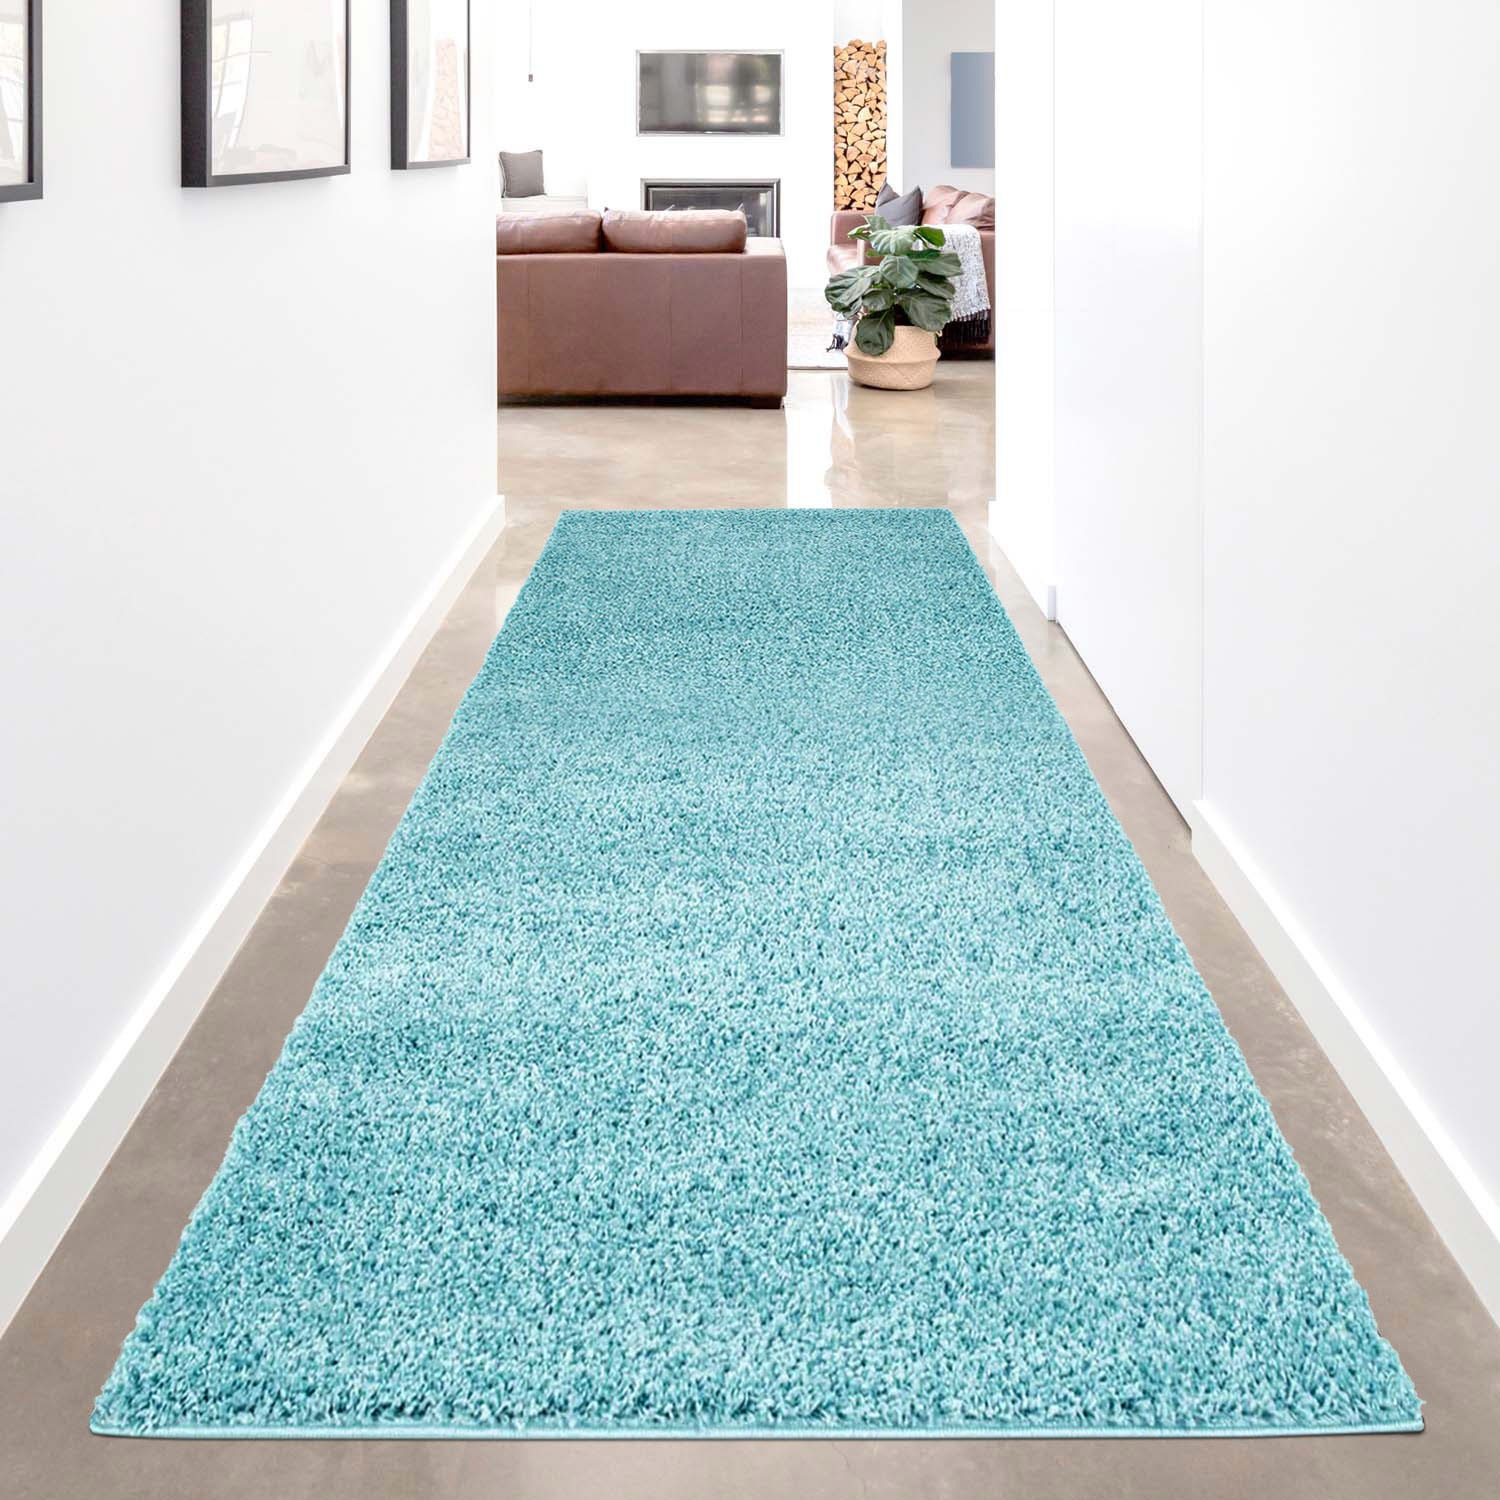 Carpet City Hochflor-Läufer "Shaggi uni 500", rechteckig, Shaggy-Teppich, Uni Farben, ideal für Flur & Diele, Langflor, 